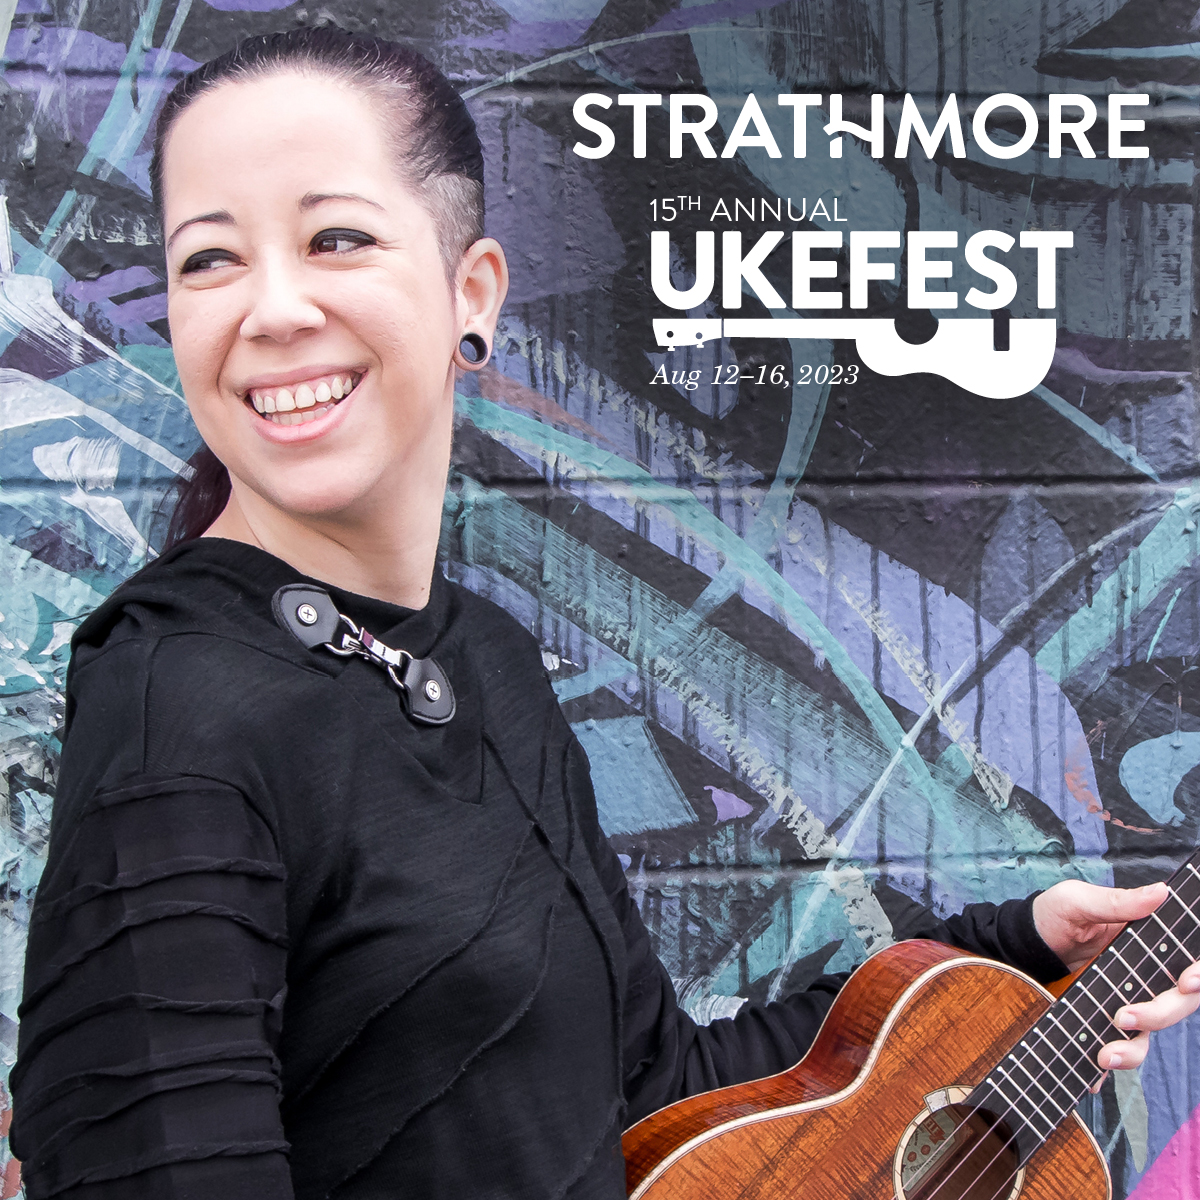 Hawaii's preeminent, award-winning, female ukulele artist. #StrathmoreUkeFest instructor @BrittniPaiva Aug 12-16 Strathmore.org/UkeFest